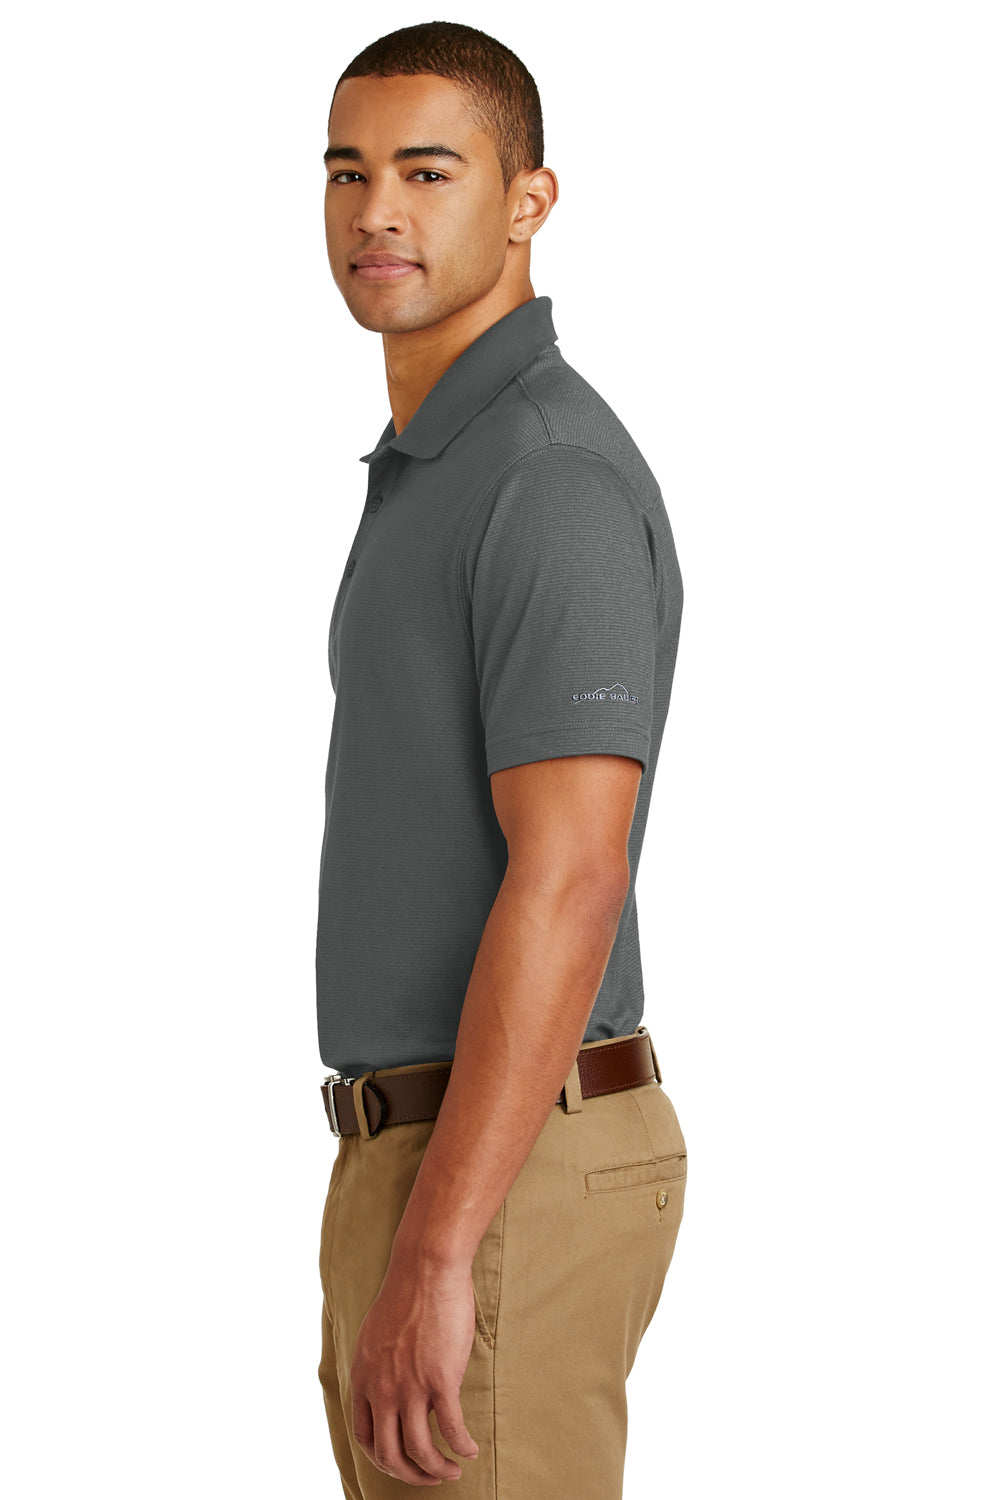 Eddie Bauer EB102 Mens Performance UV Protection Short Sleeve Polo Shirt Steel Grey Model Side